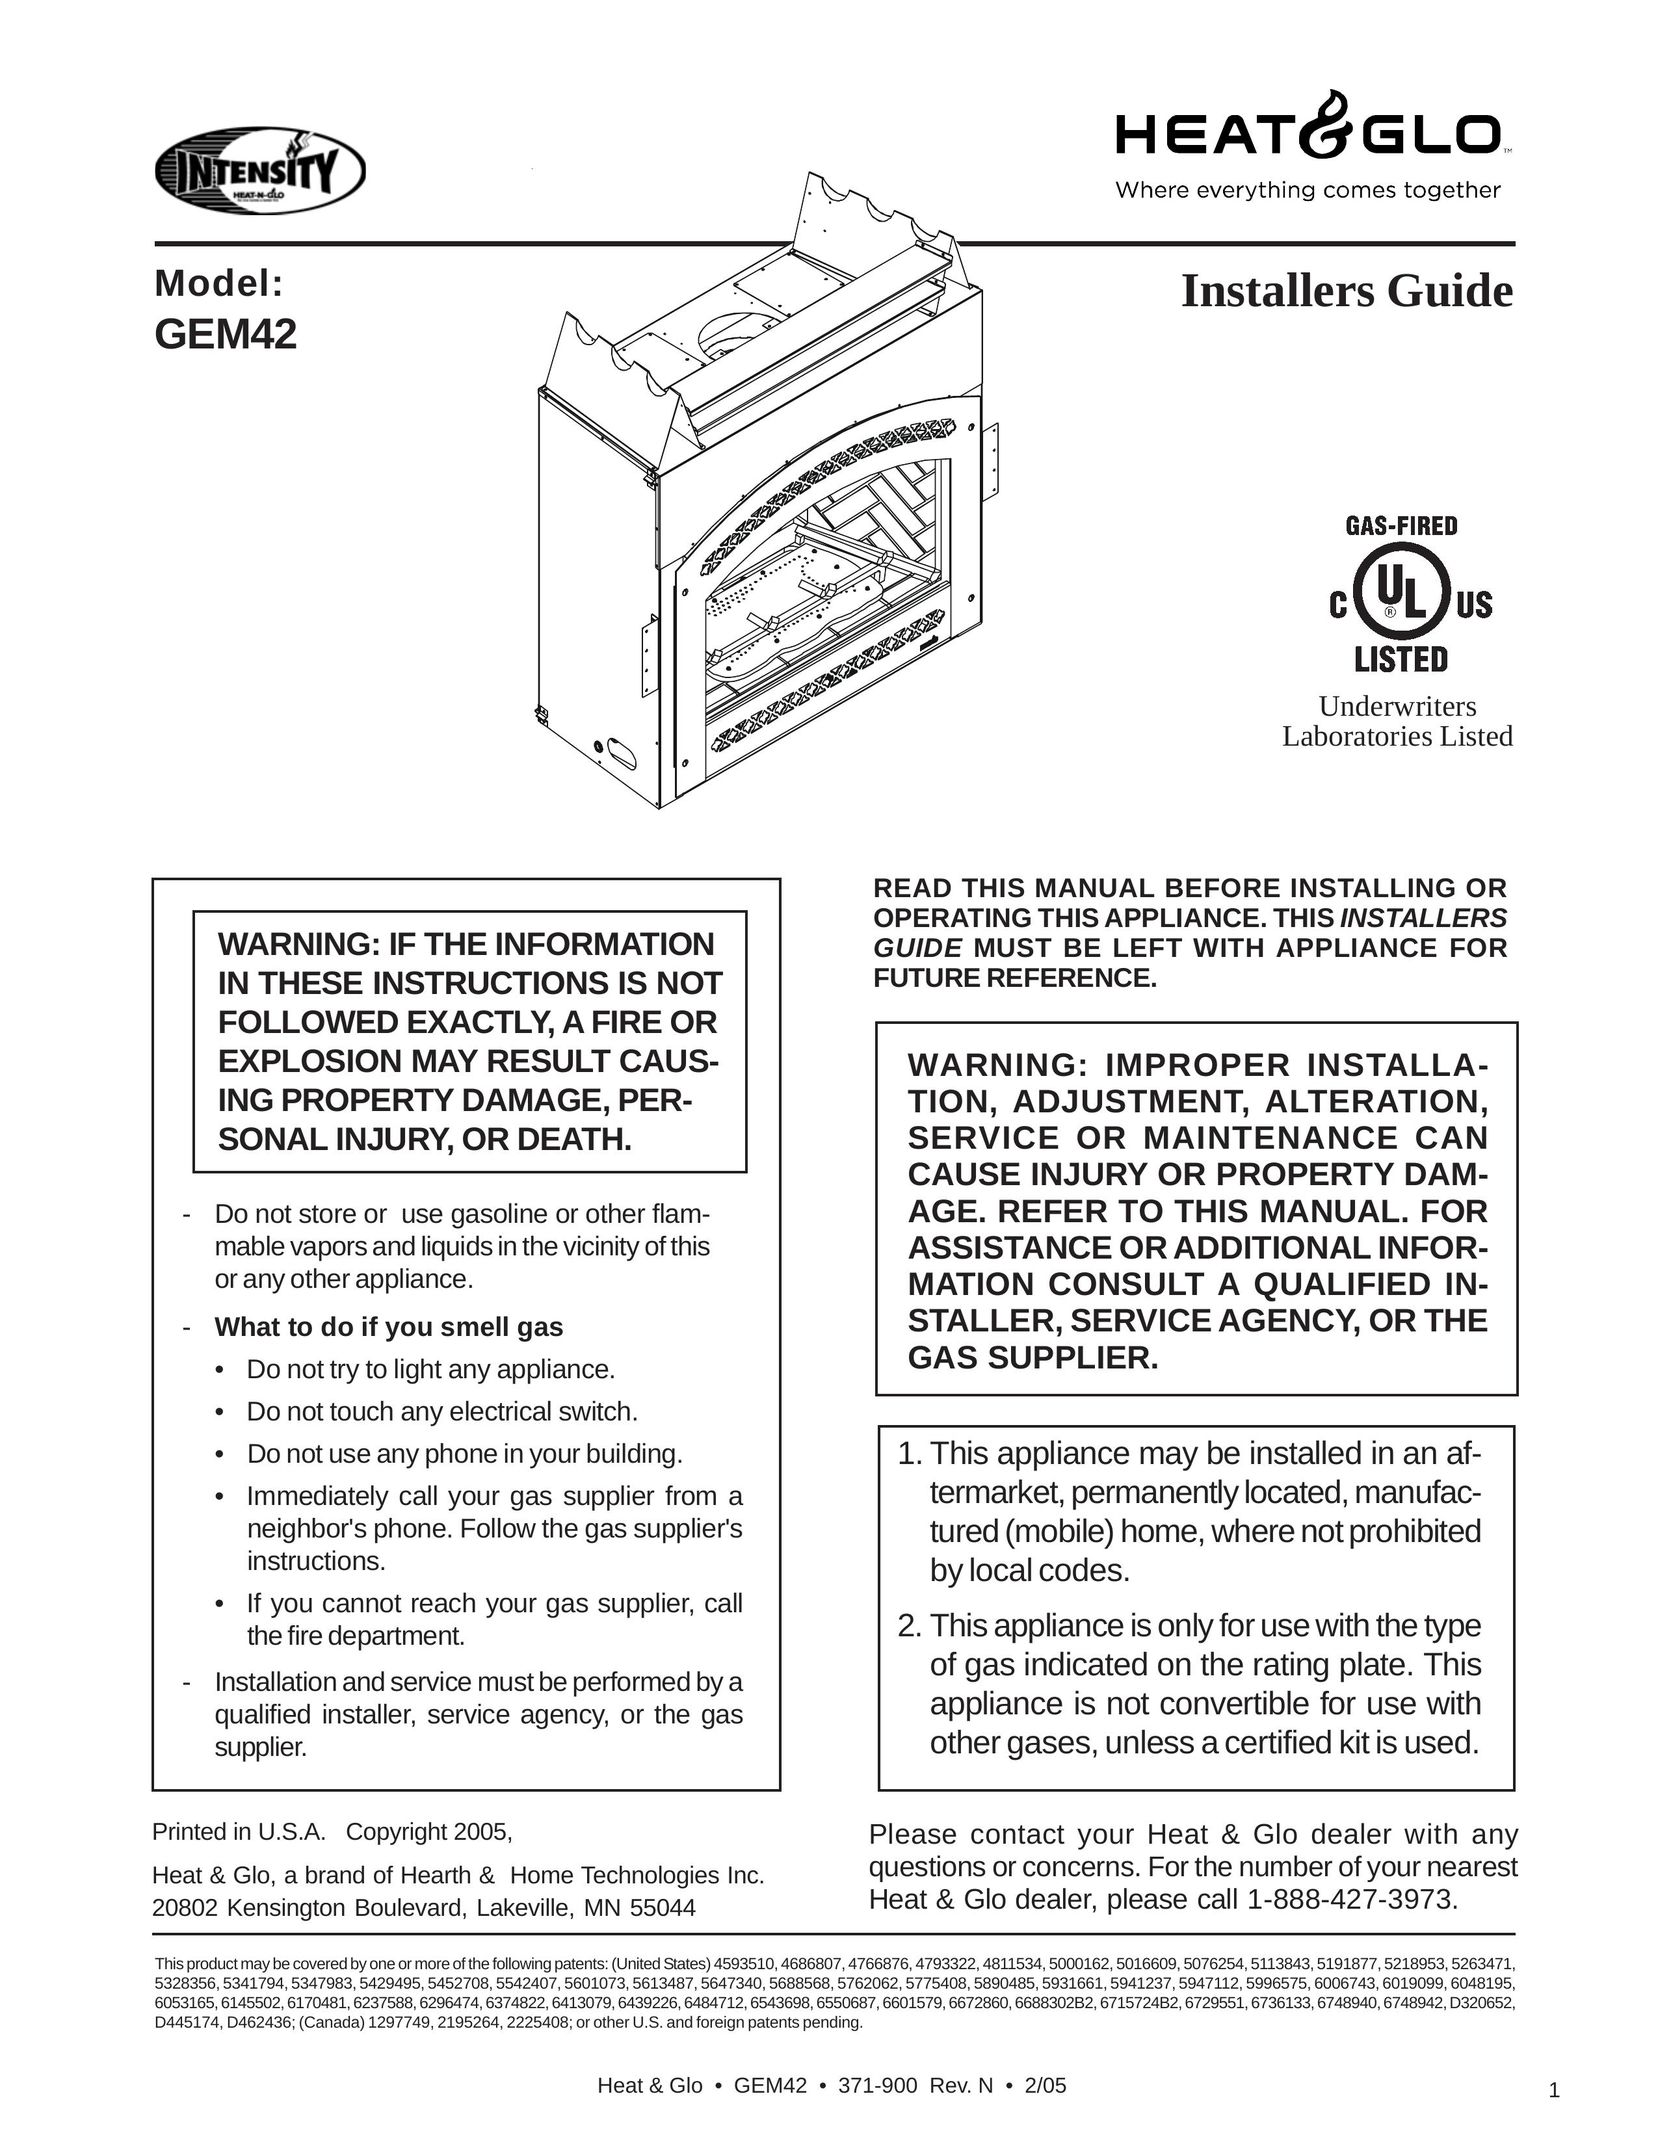 Heat & Glo LifeStyle GEM42 Gas Heater User Manual